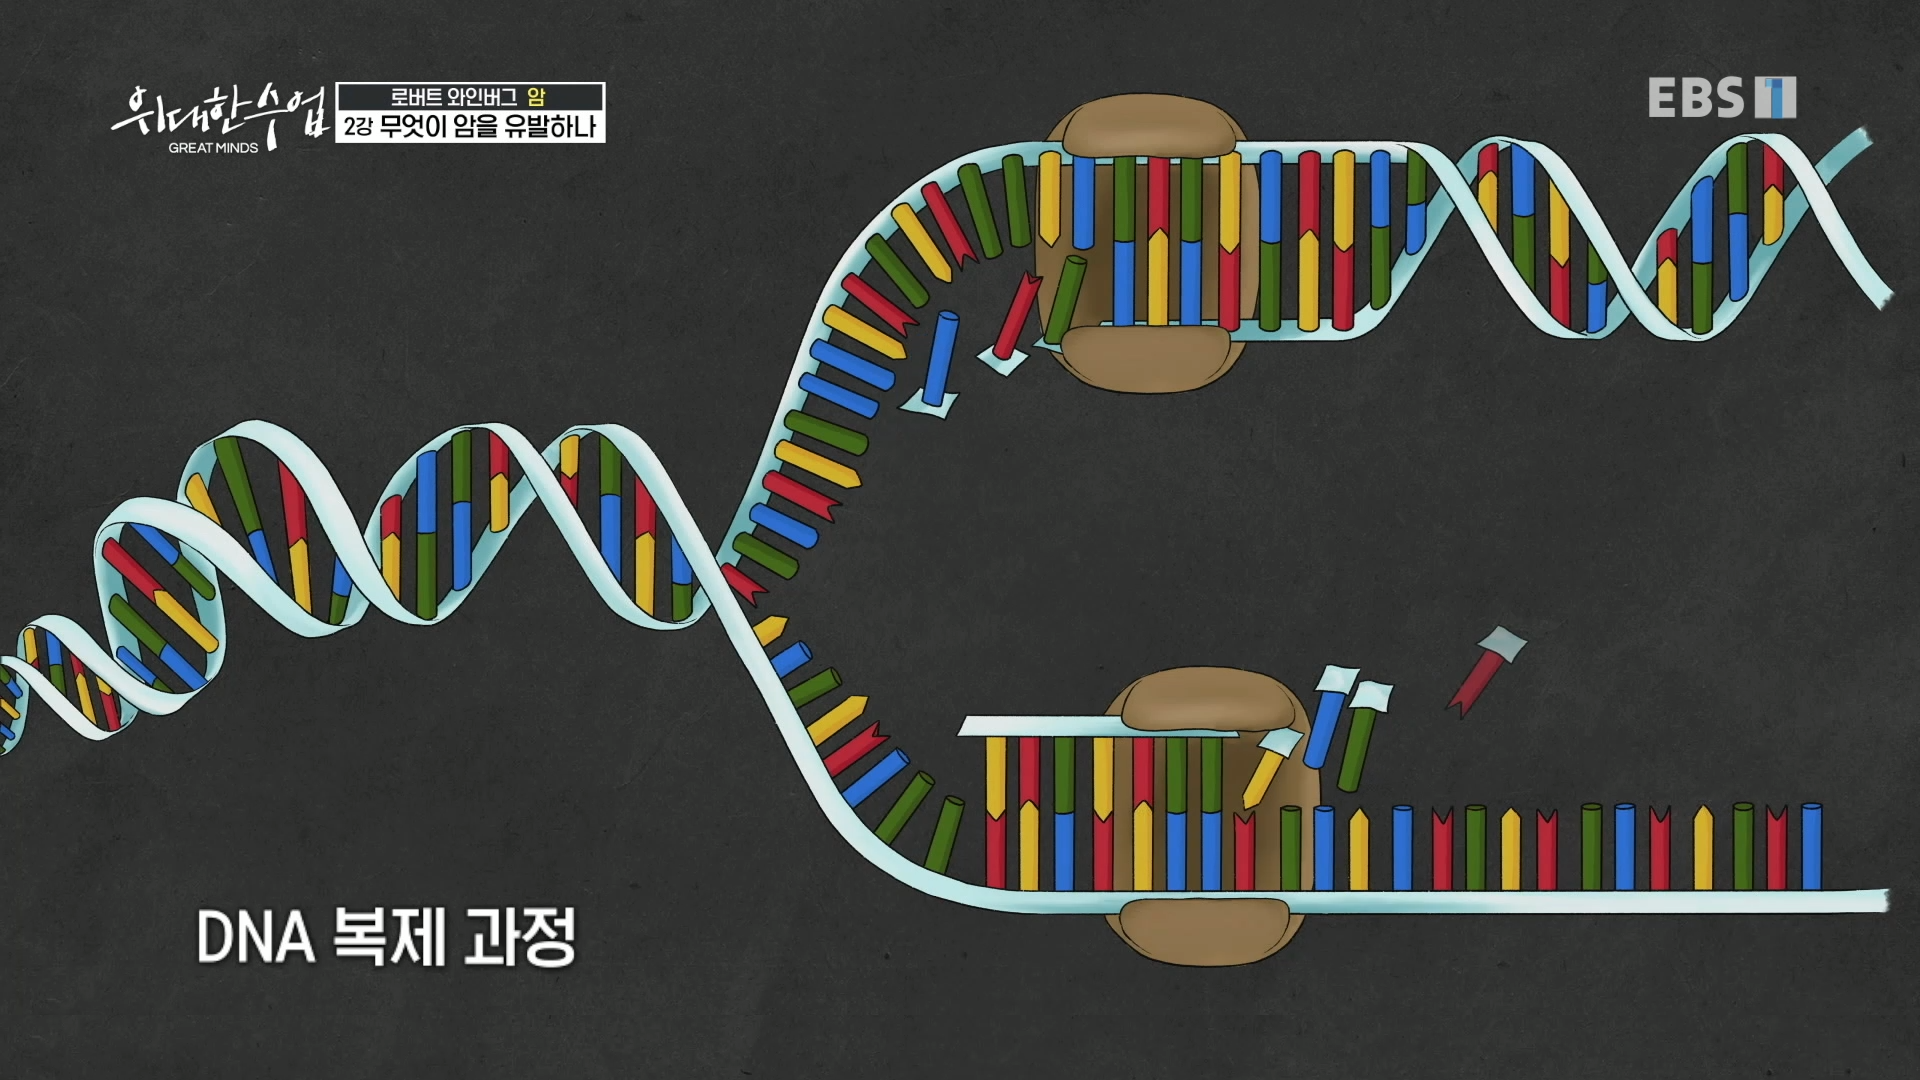 DNA 복제 과정